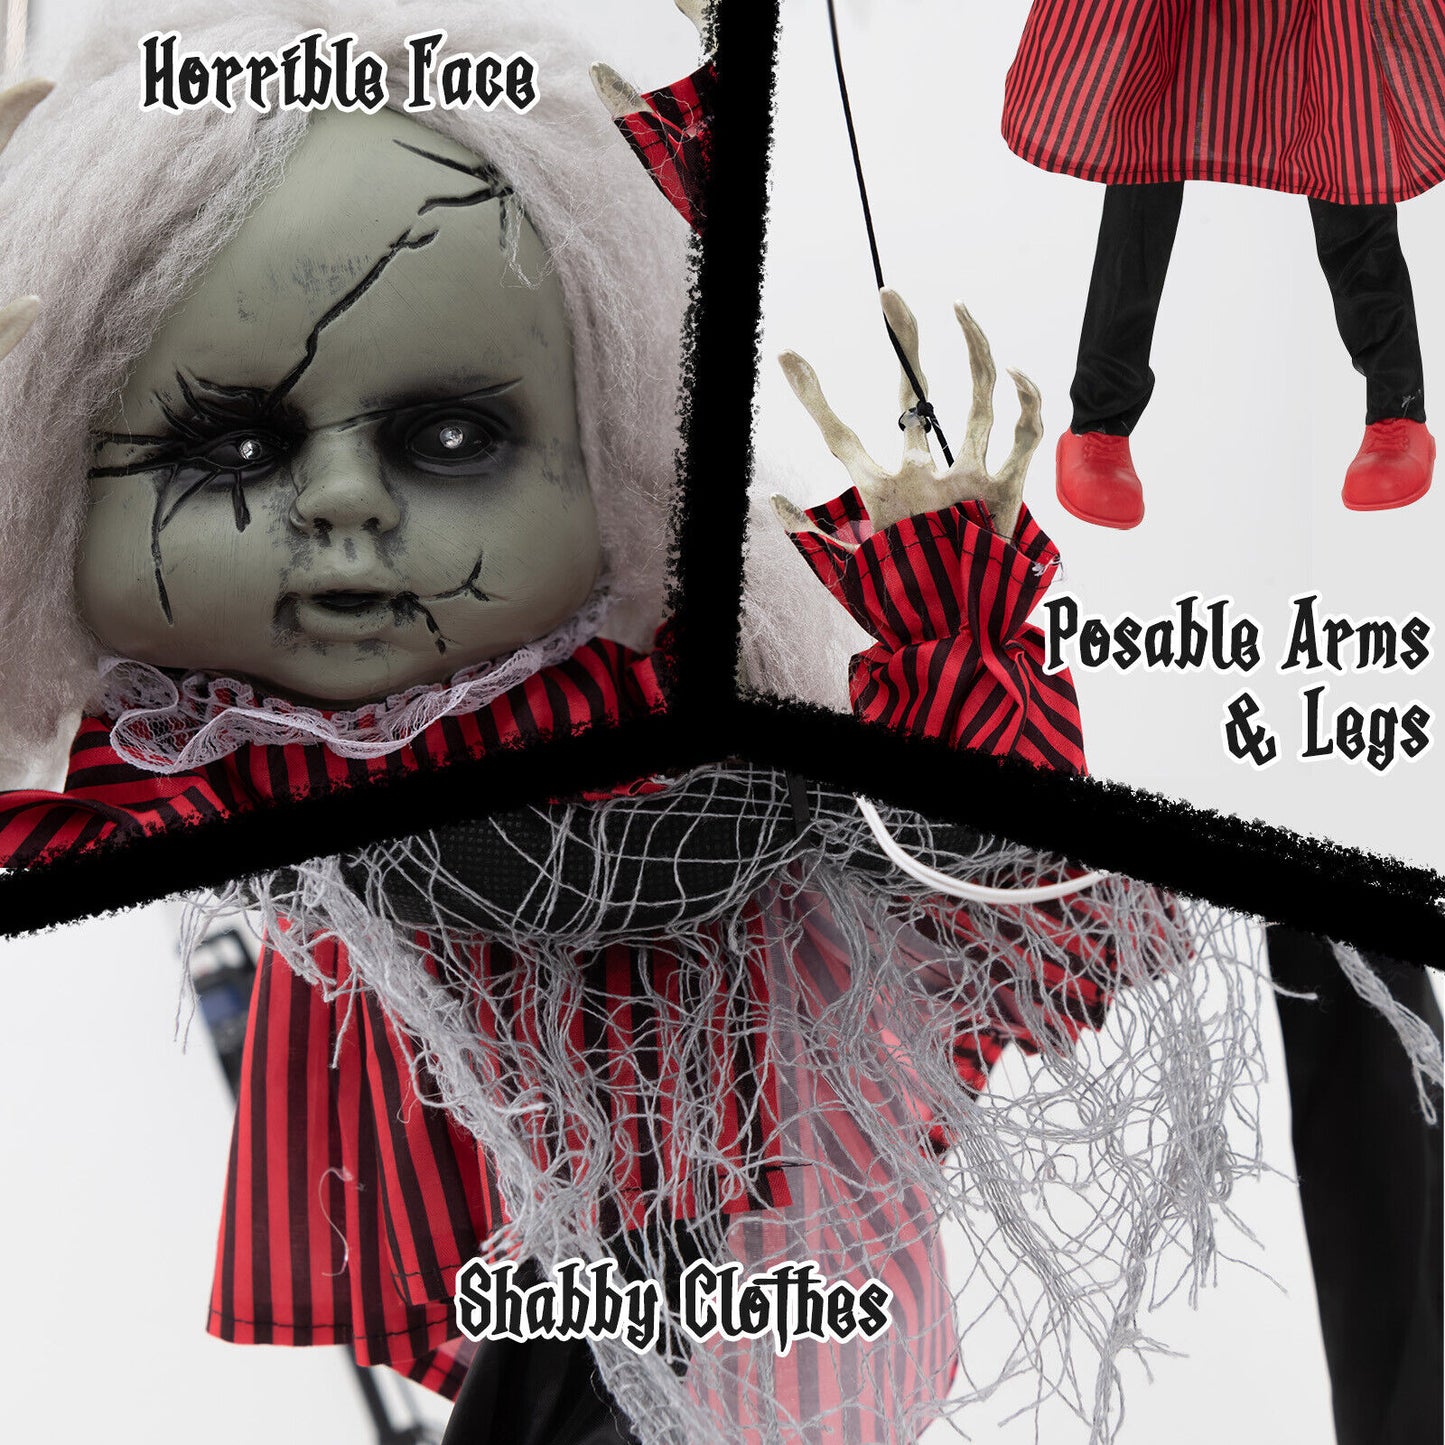 Halloween Decor - Creepy Doll Halloween Decorations Outdoor